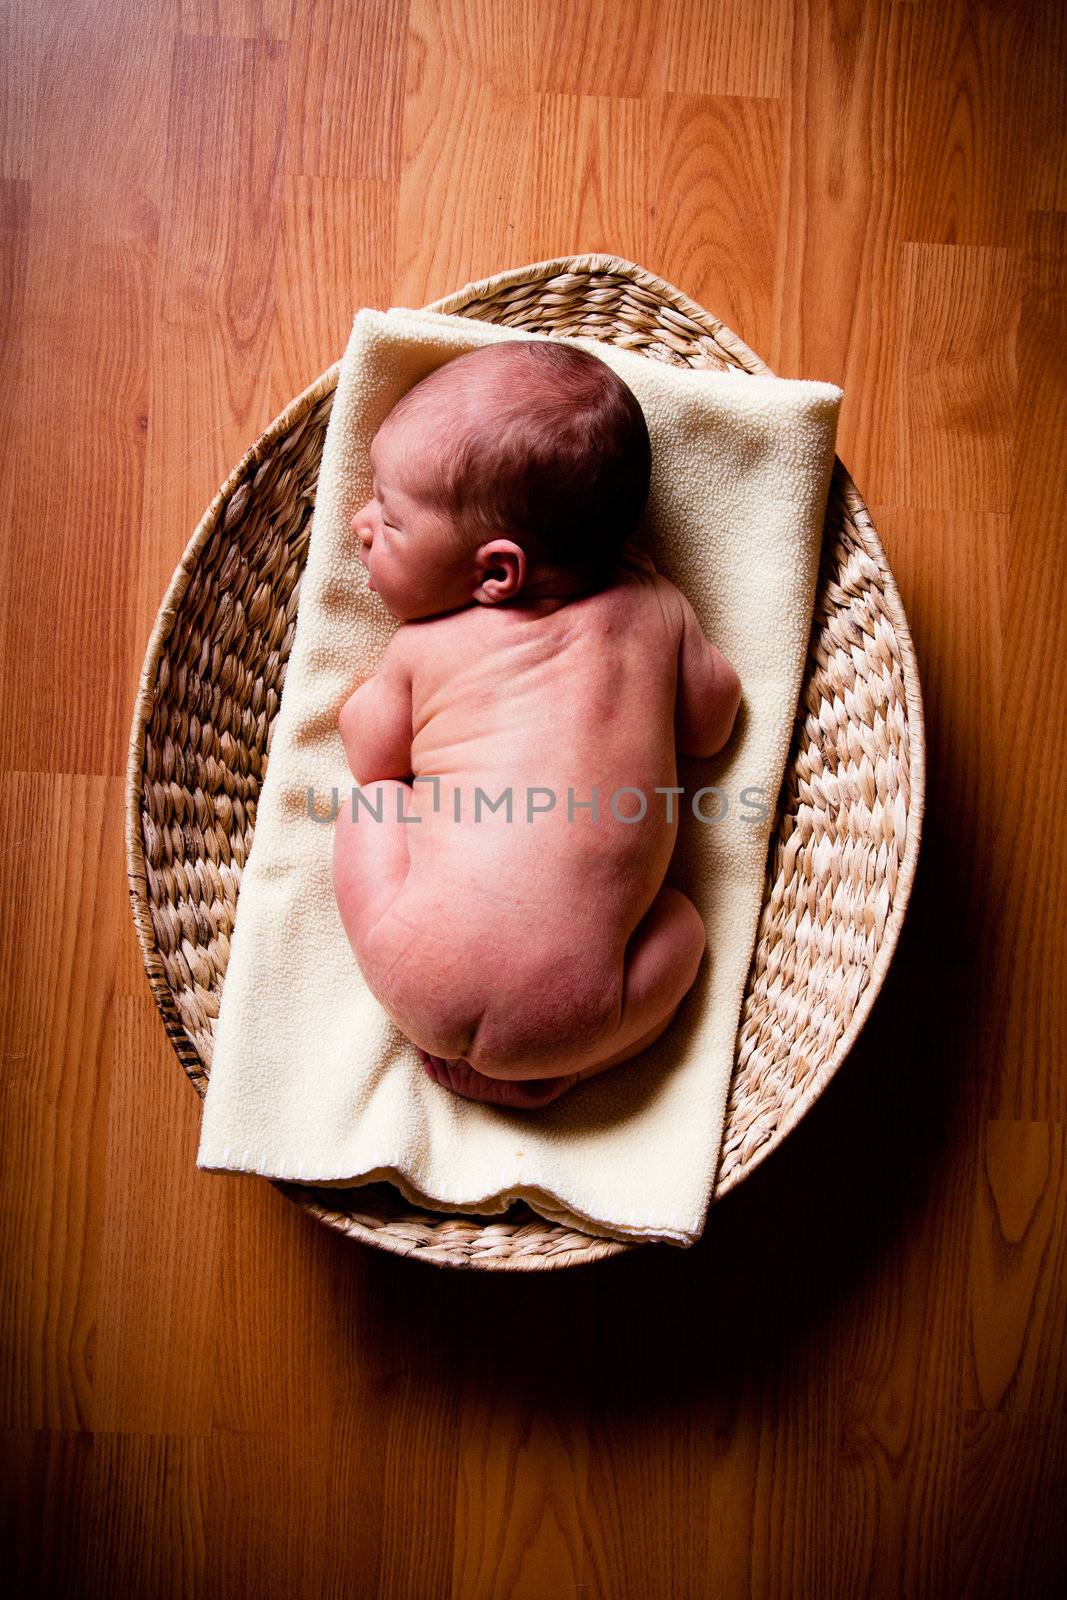 Naked newborn baby boy by Talanis